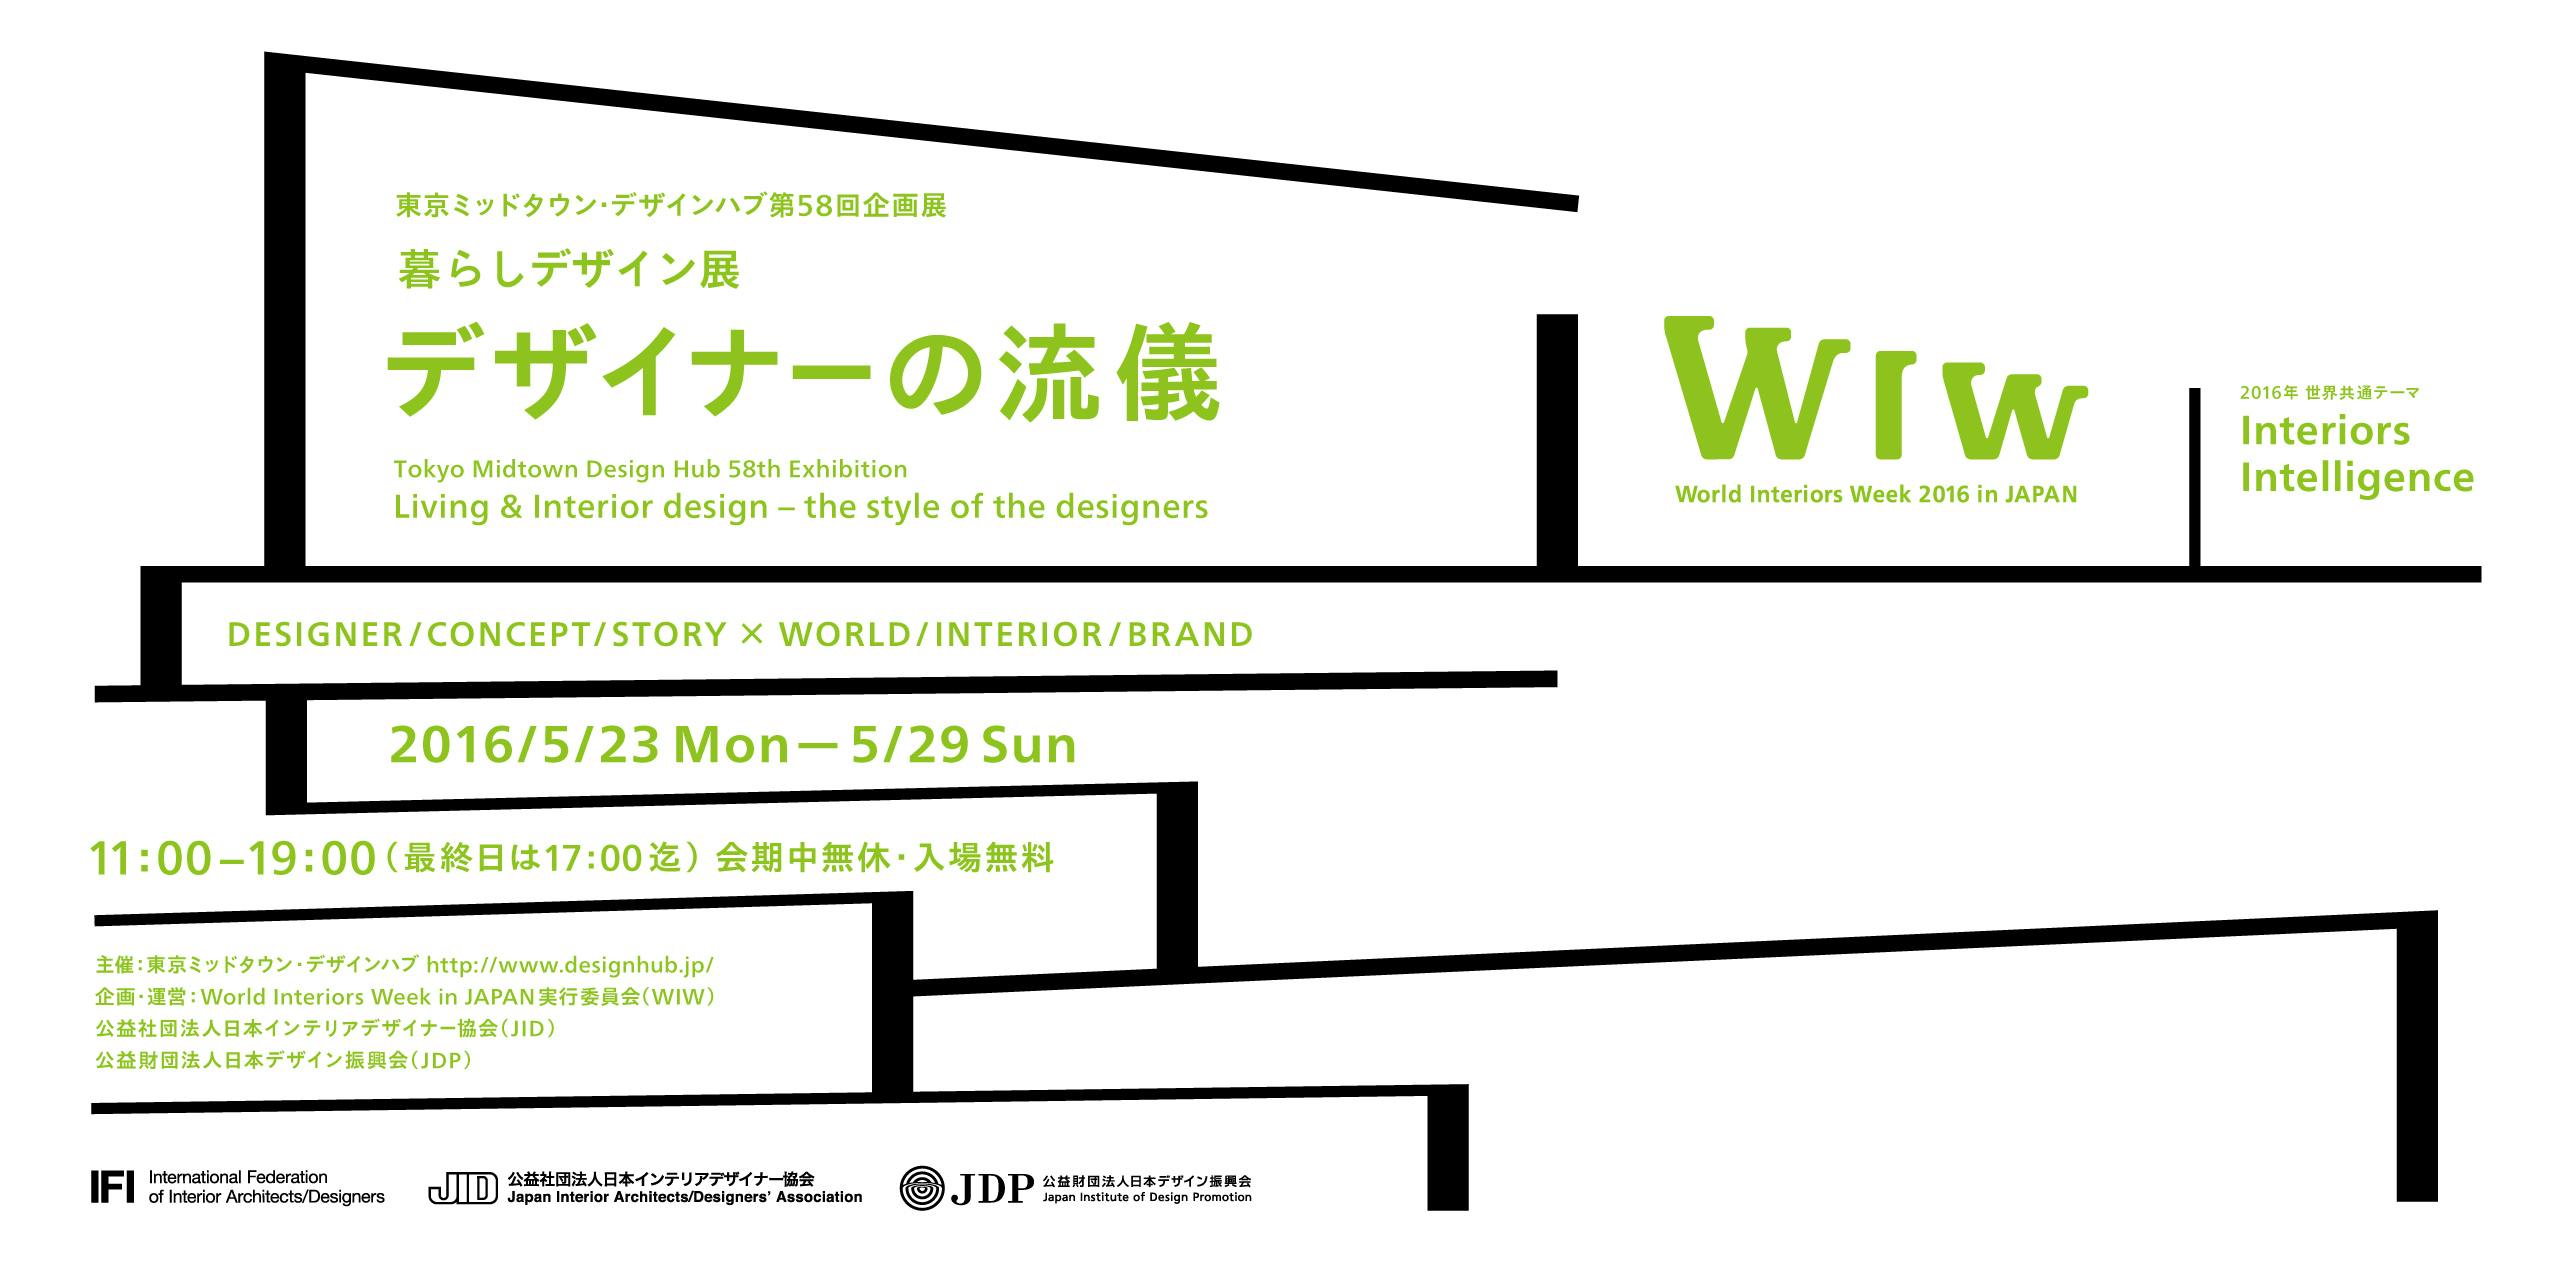 World Interiors Week 2016 in JAPAN「暮らしデザイン展」